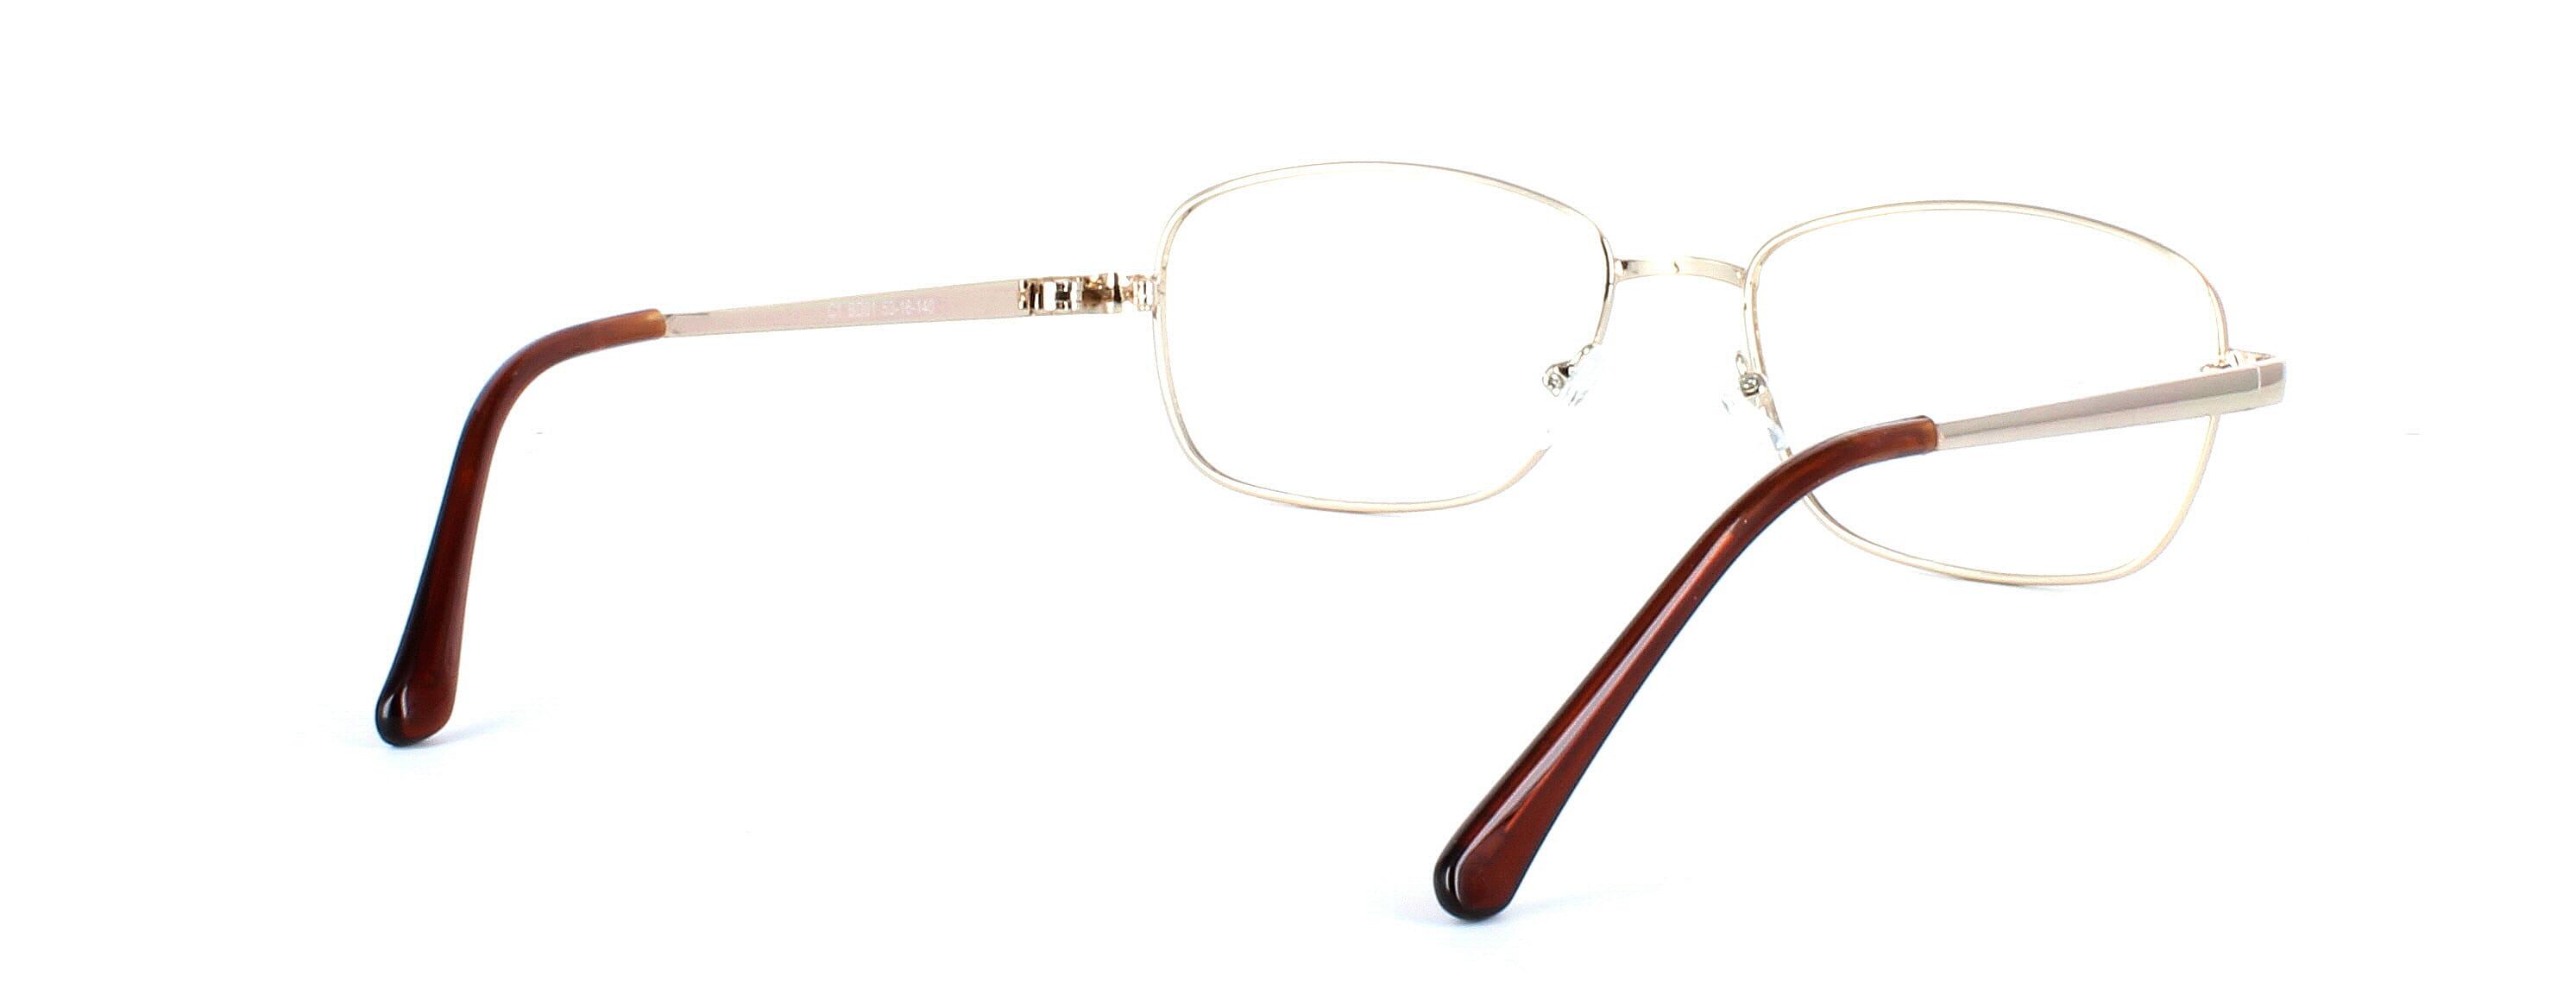 Heather - Ladies rectangular shaped full-rim metal glasses frame - image view 5